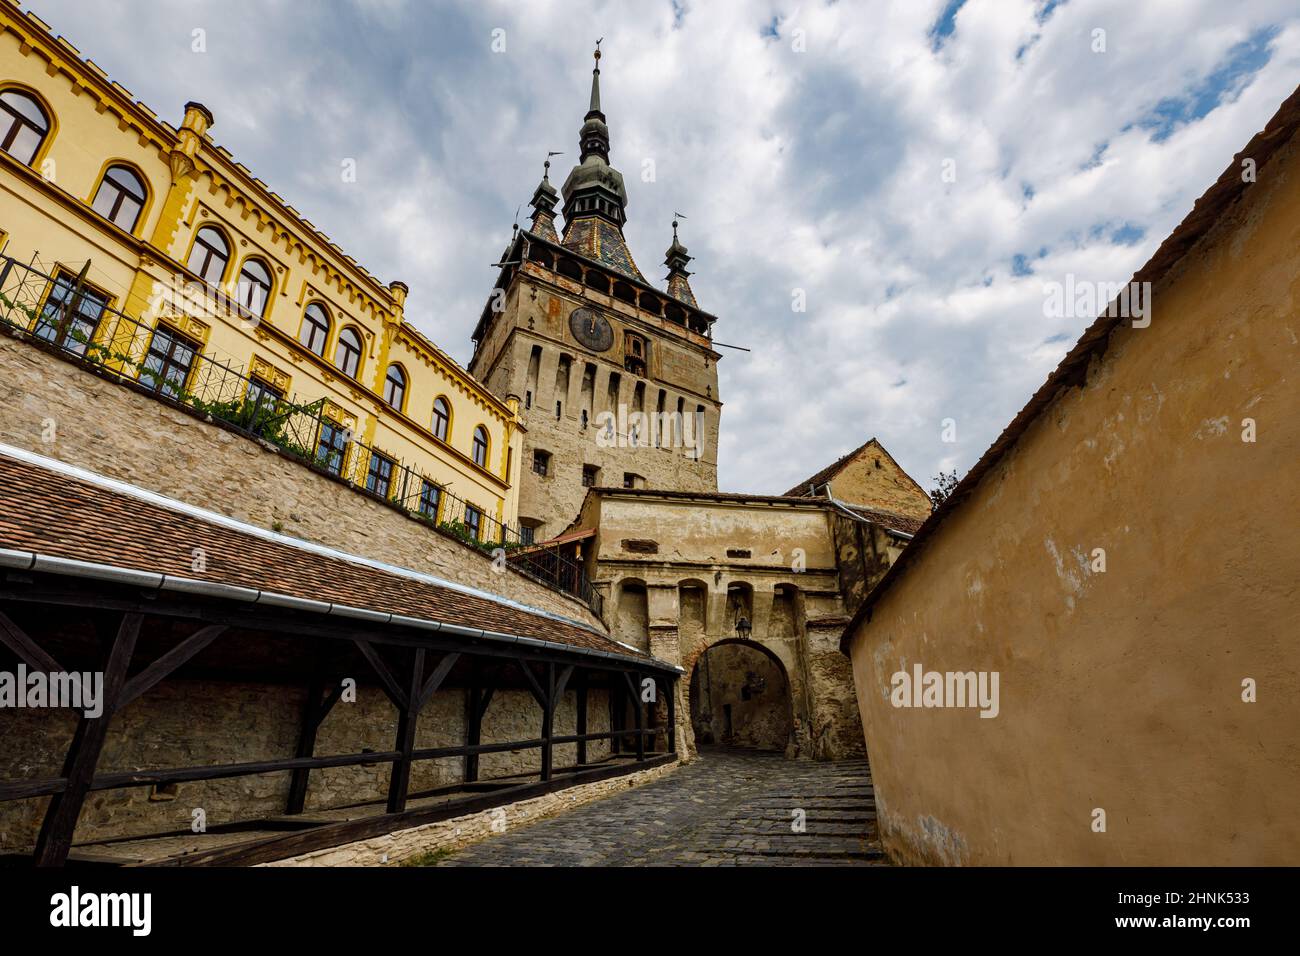 Die historische Stadt Sighisoara in Transilvania Rumänien Stockfoto